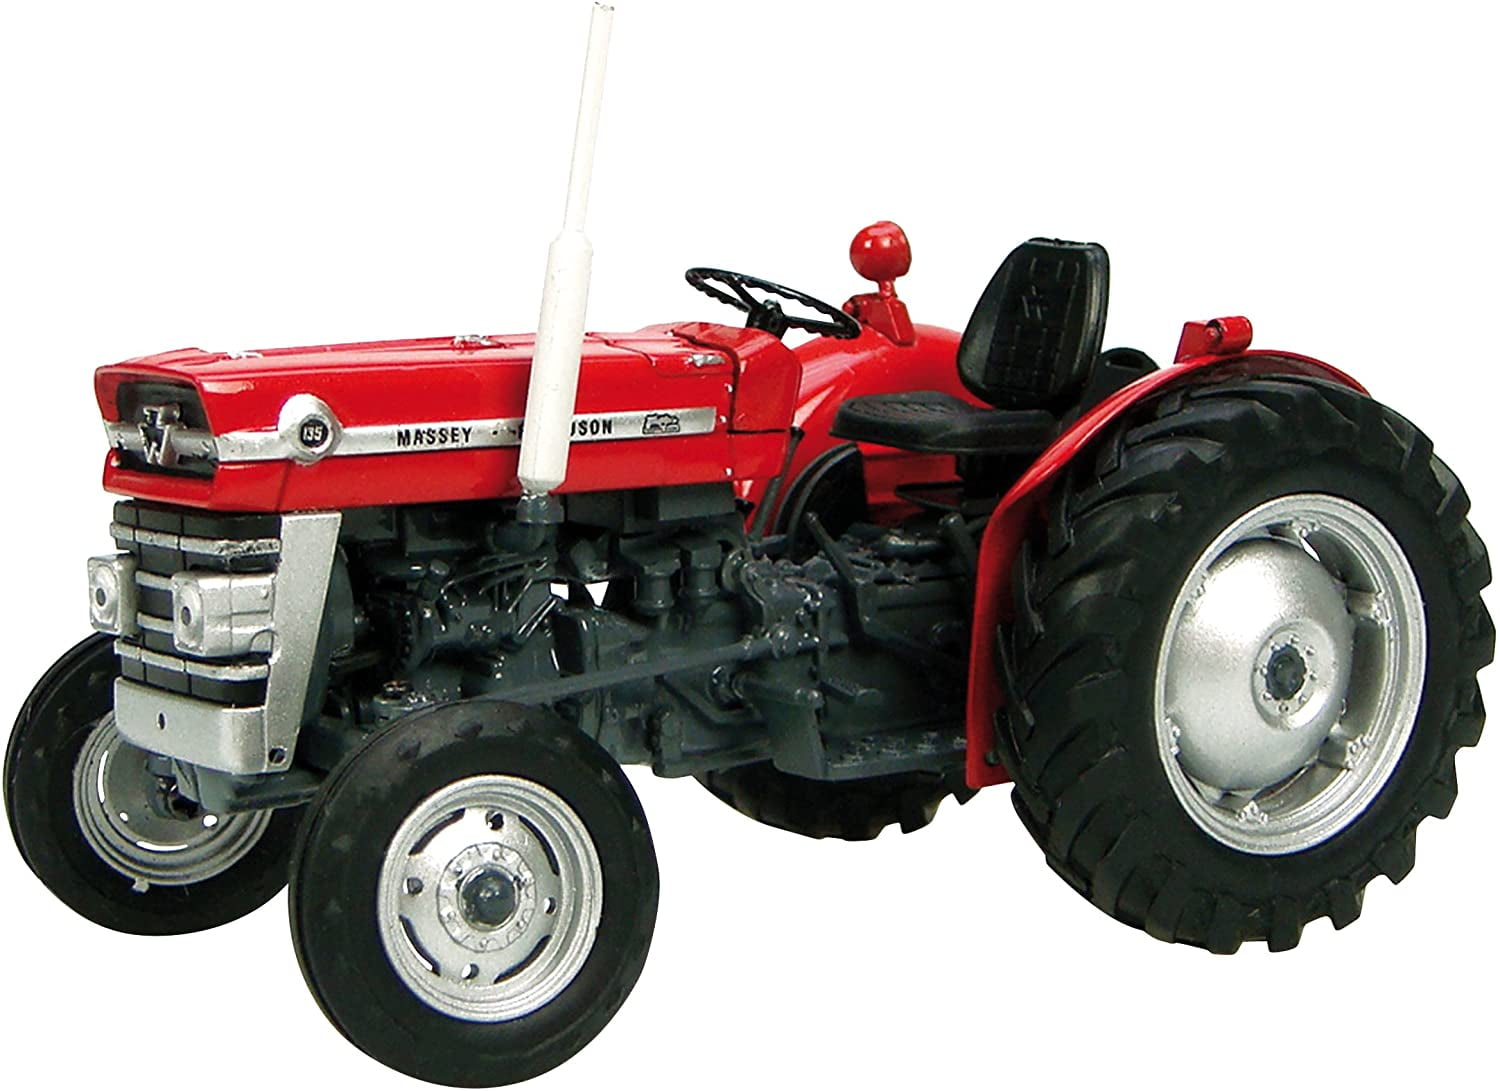 Universal Hobbies 1/16th Scale Tractor MODEL Massey Ferguson 175 1968